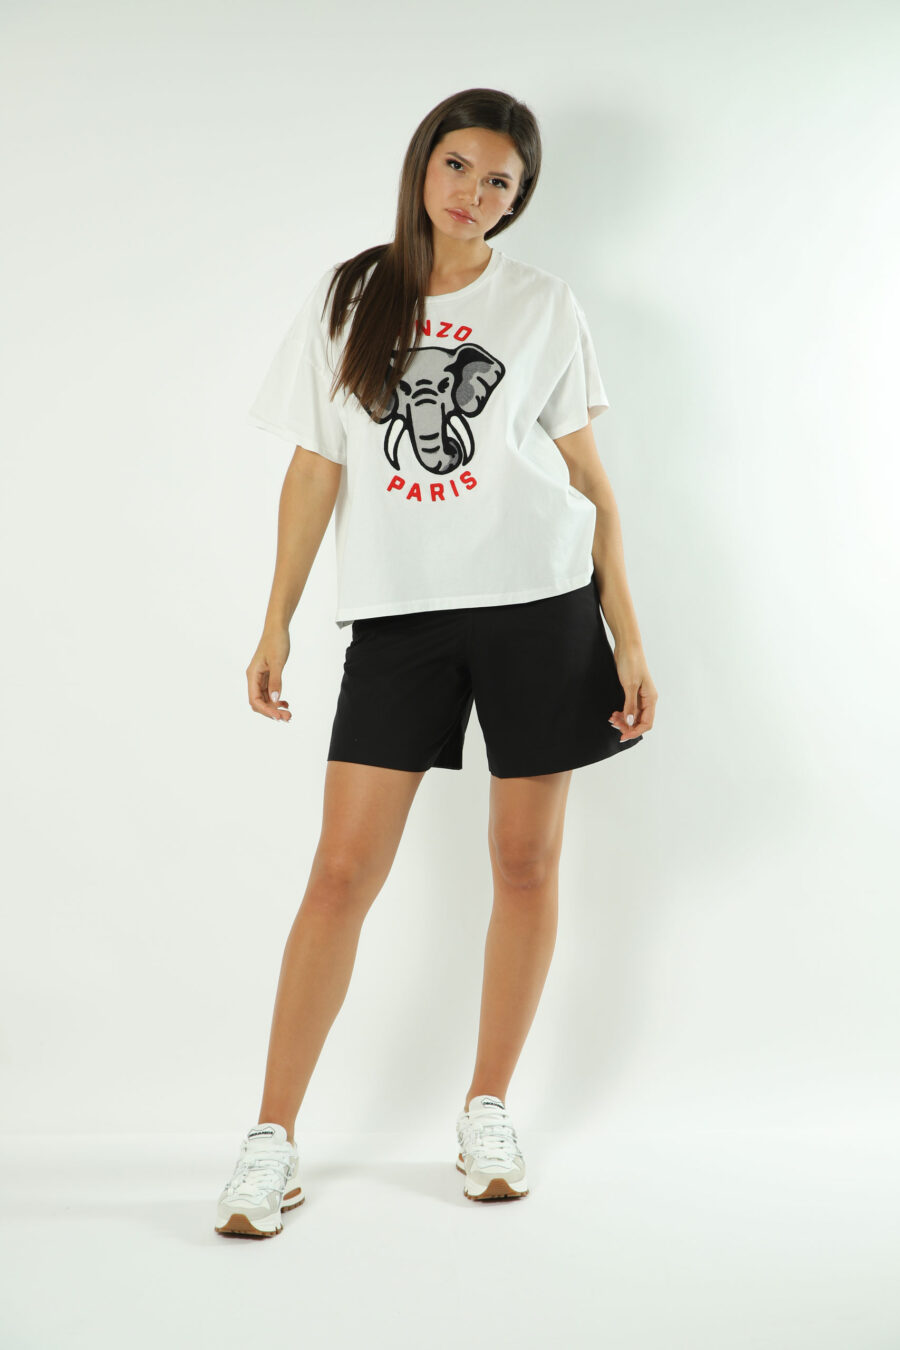 Weißes T-Shirt mit Elefanten-Maxilogo - Fotos 1516